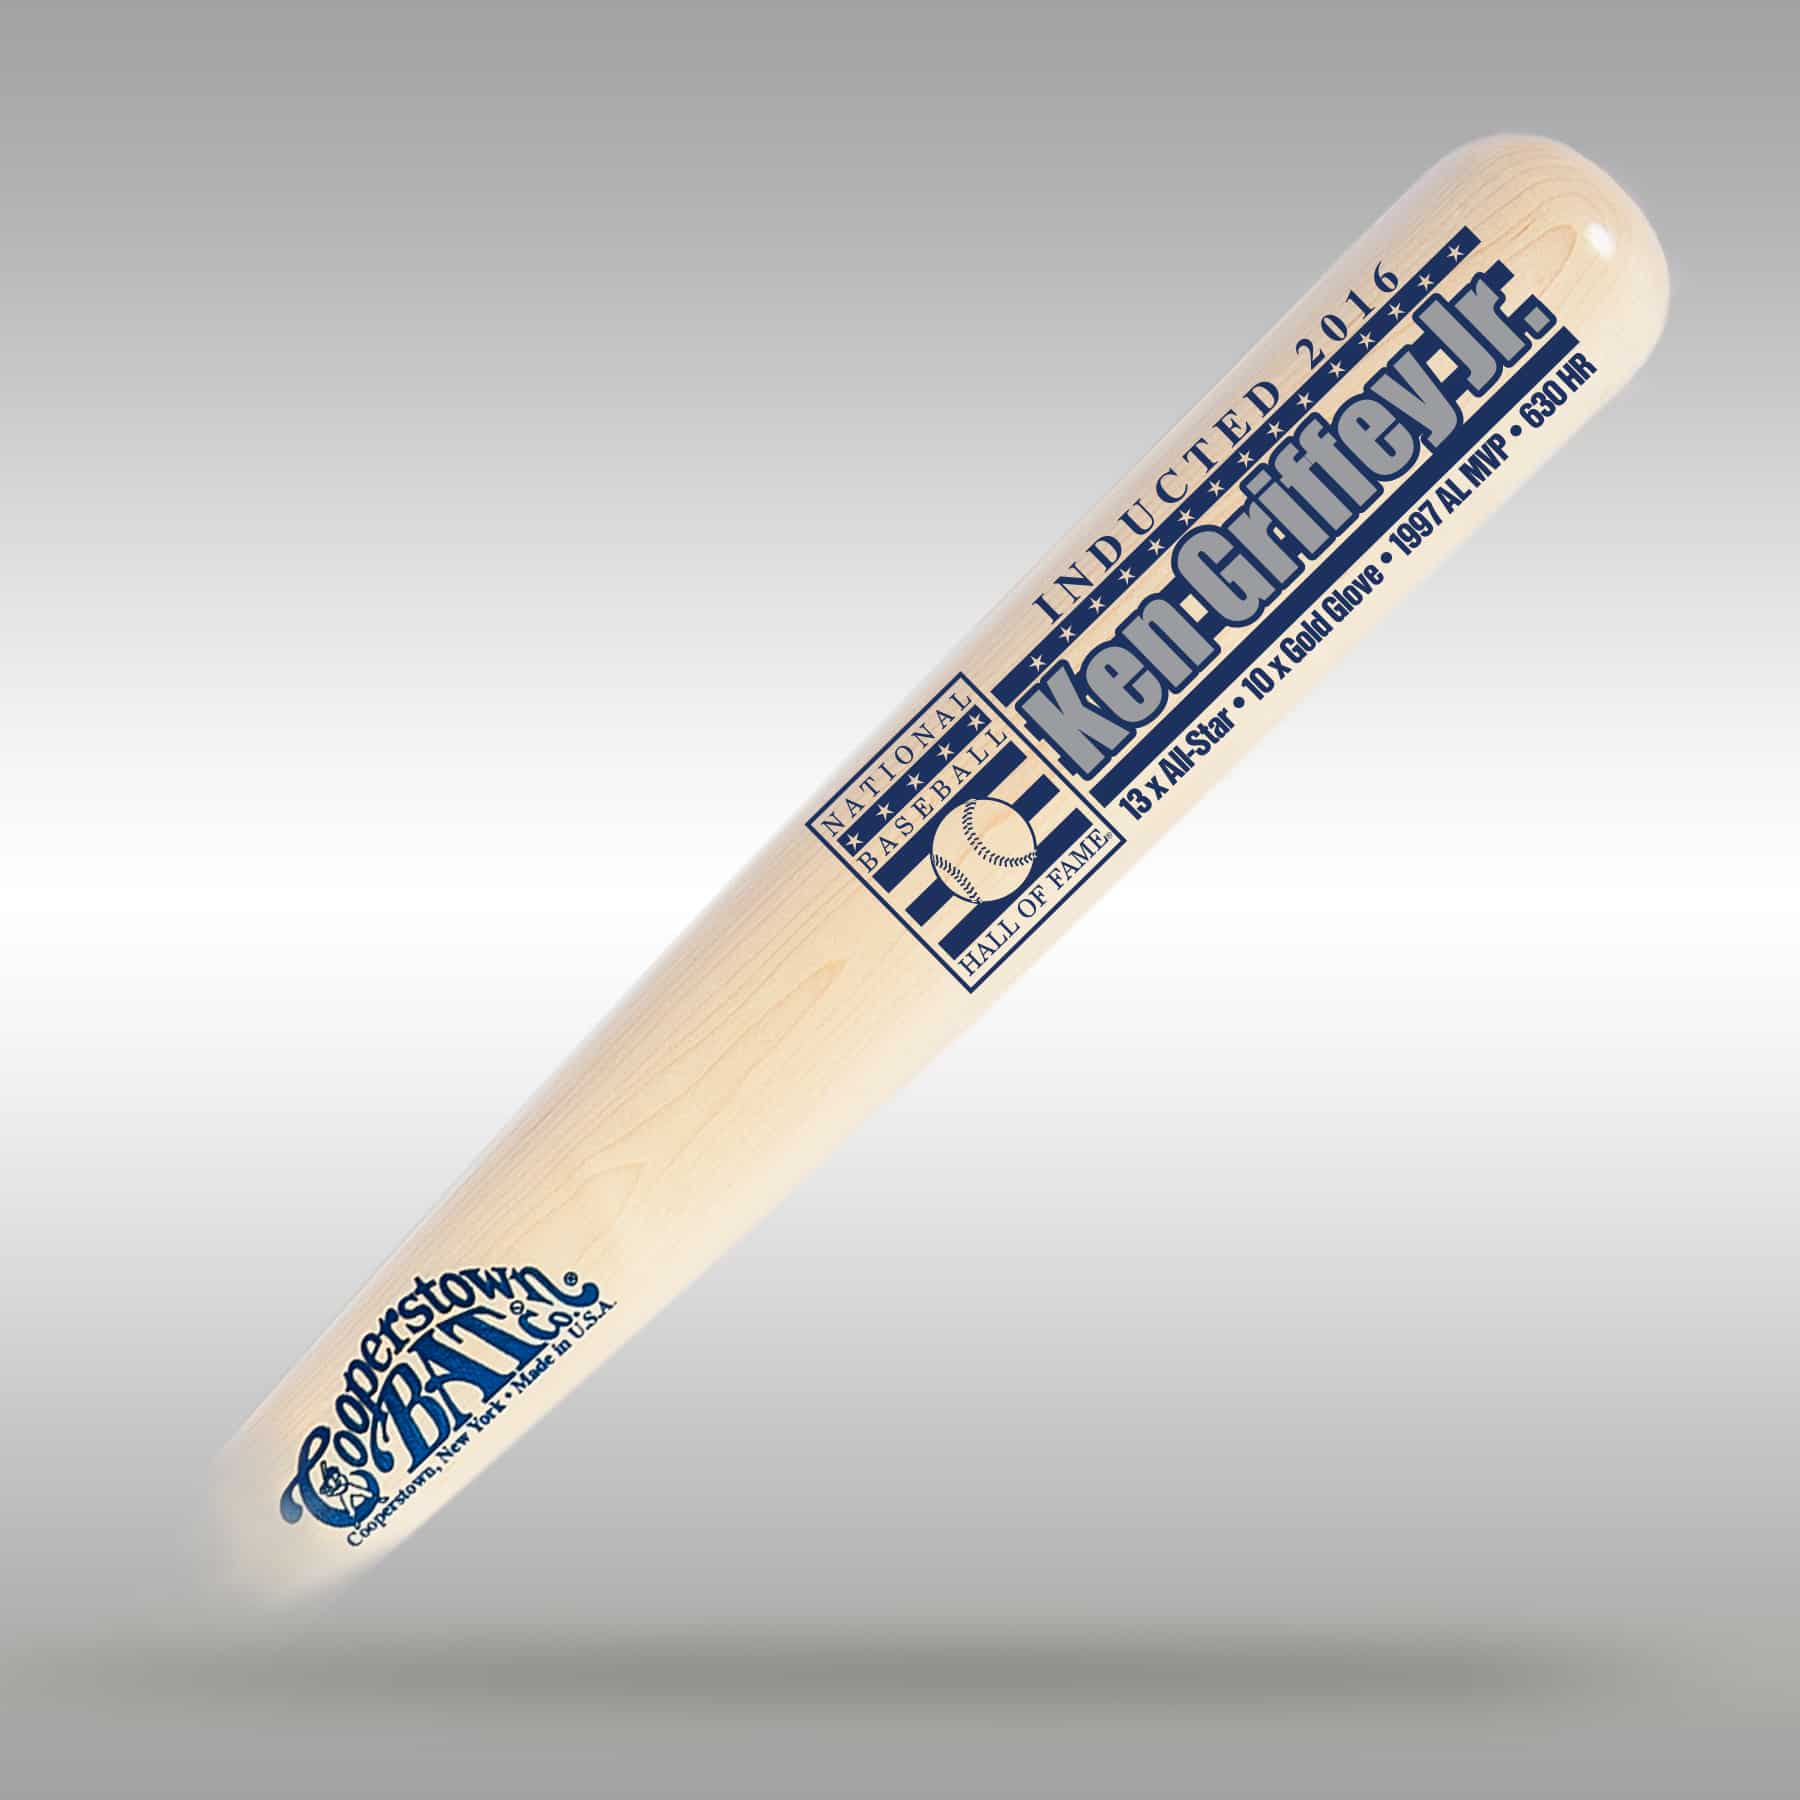 Ken Griffey Jr Baseball Hall of Fame Stats Bat - Cooperstown Bat Company